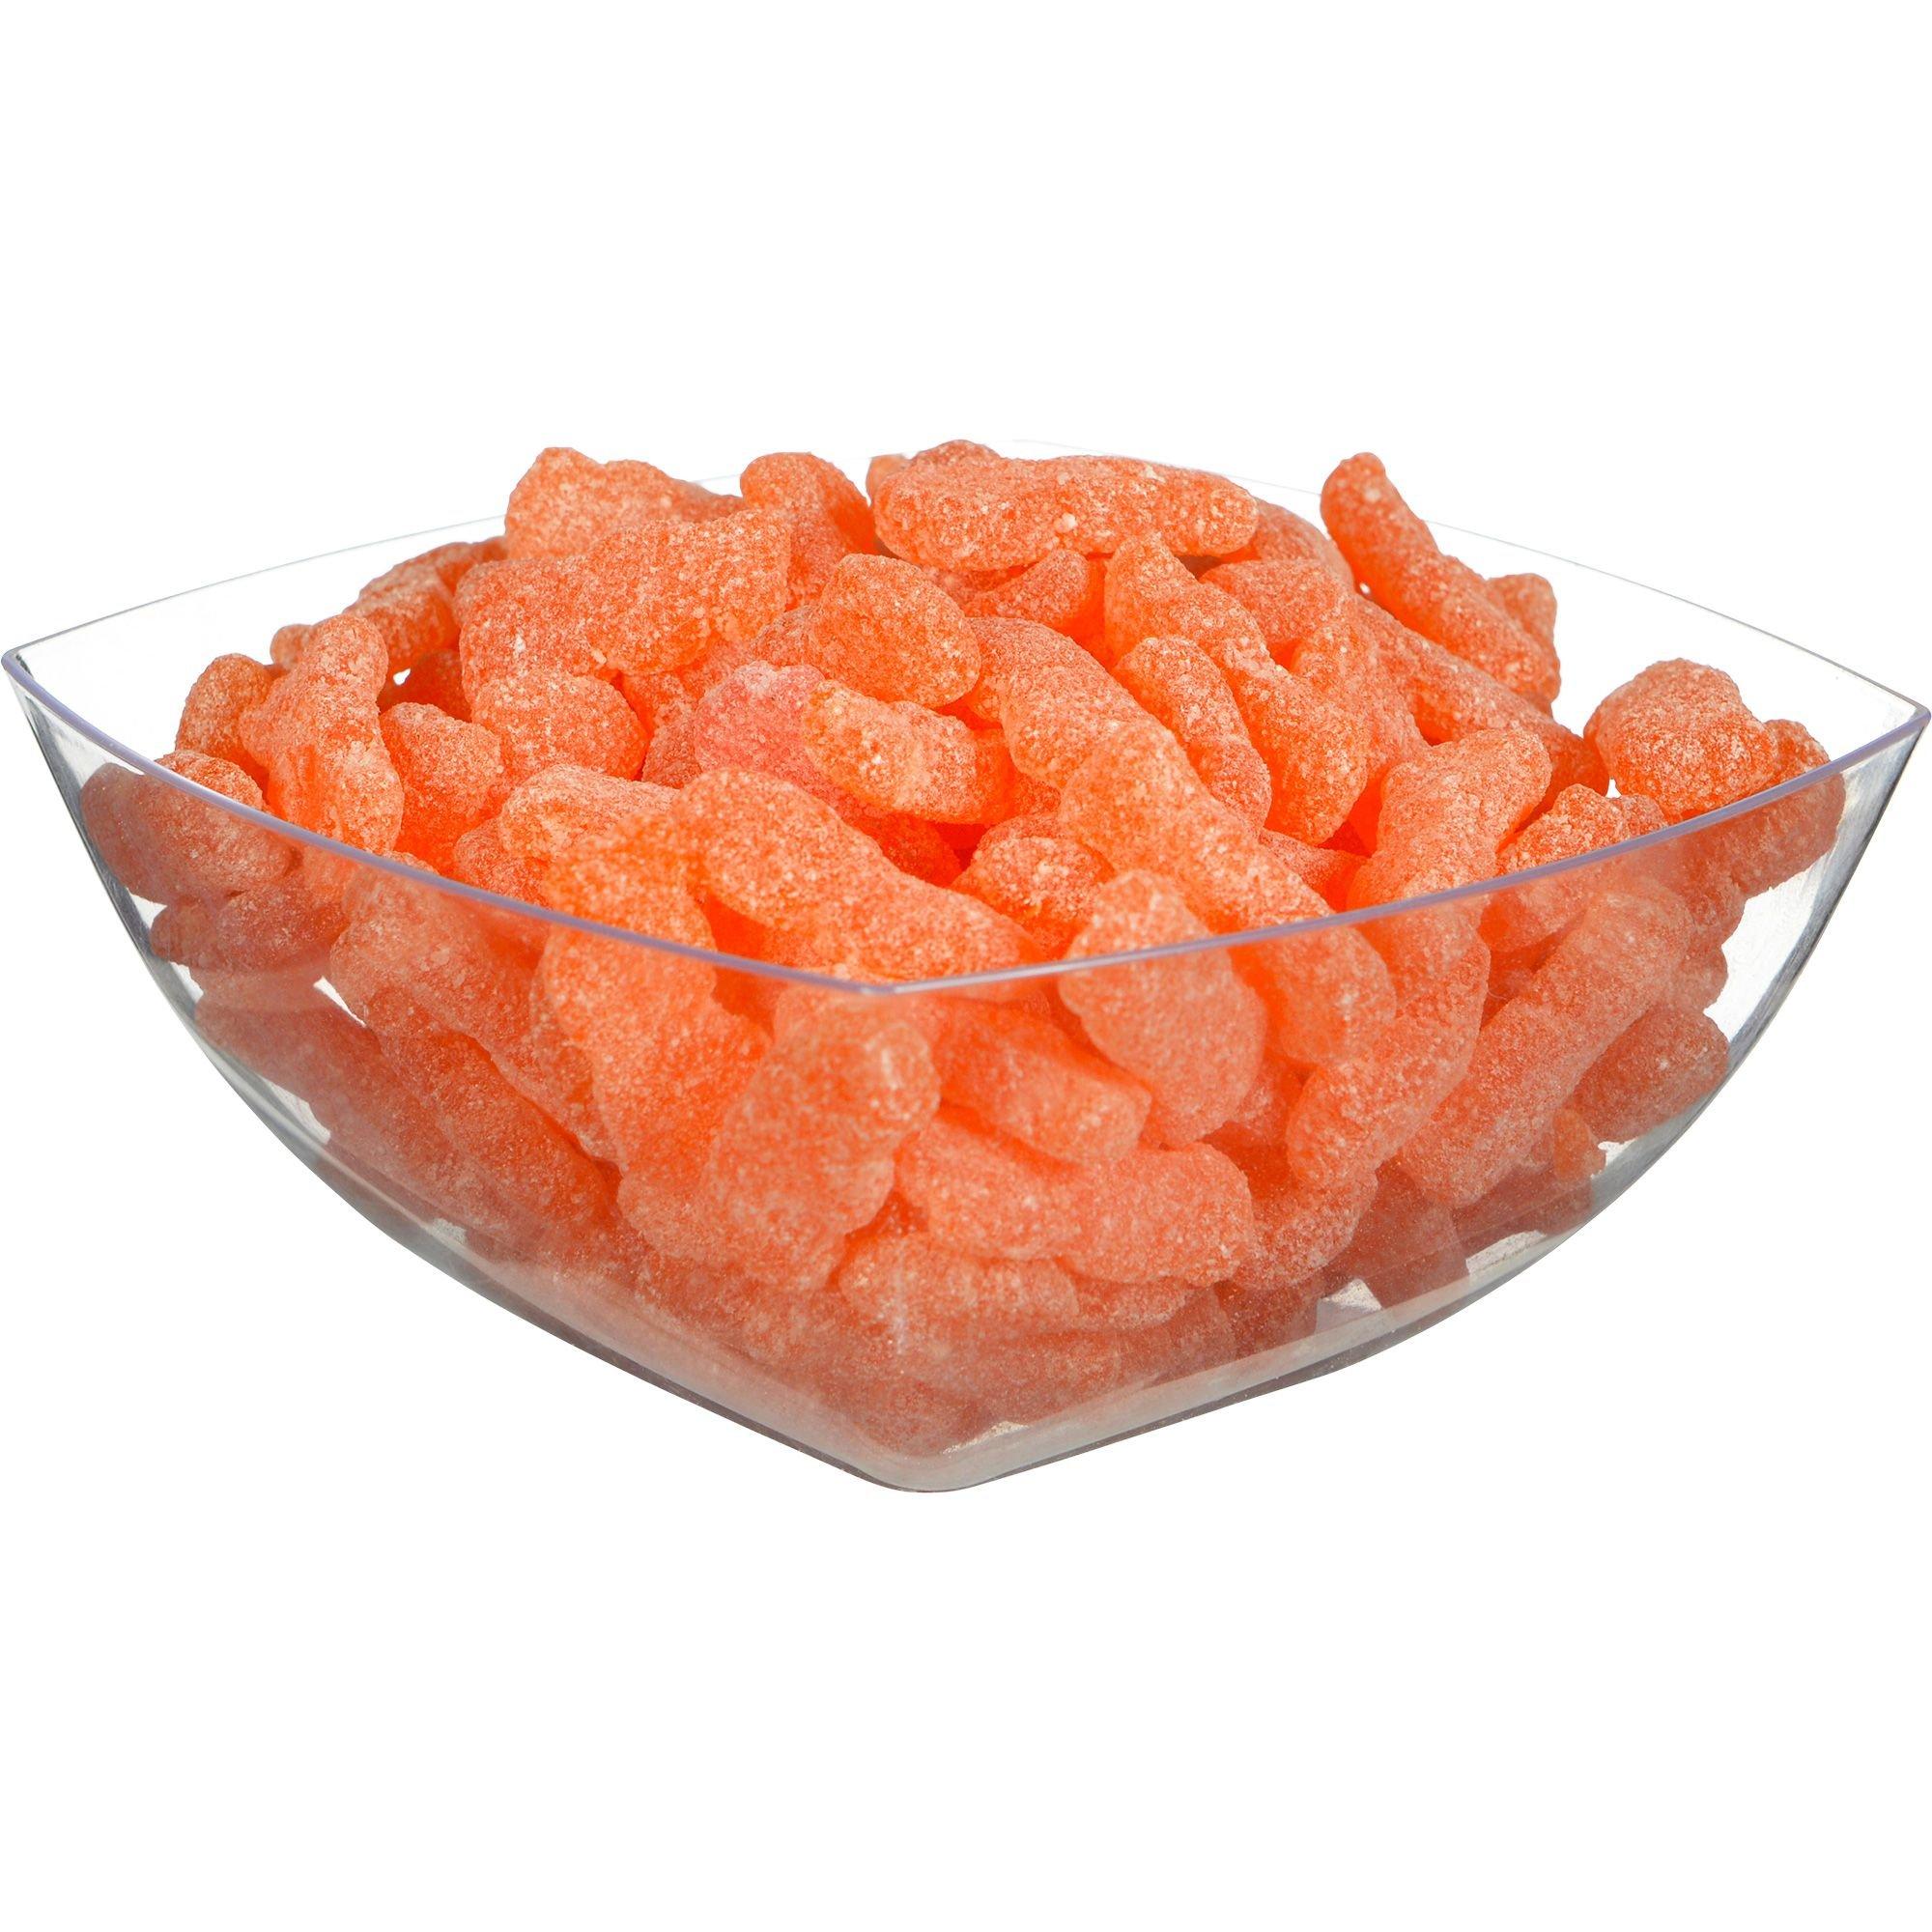 Orange Sour Patch Kids, 16oz - Orange Flavor